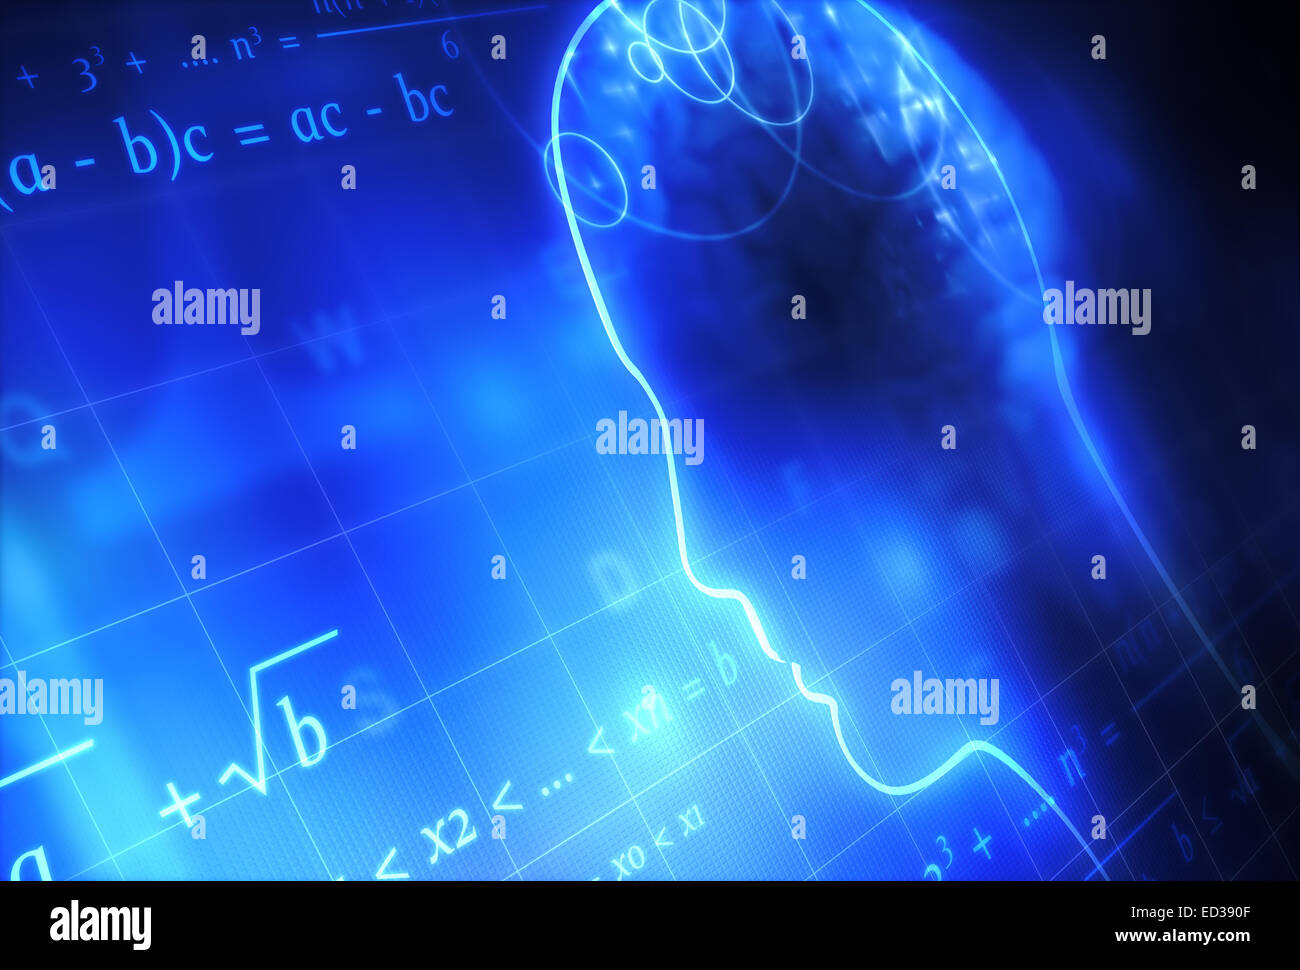 Human brain and mathematical symbols. Stock Photo